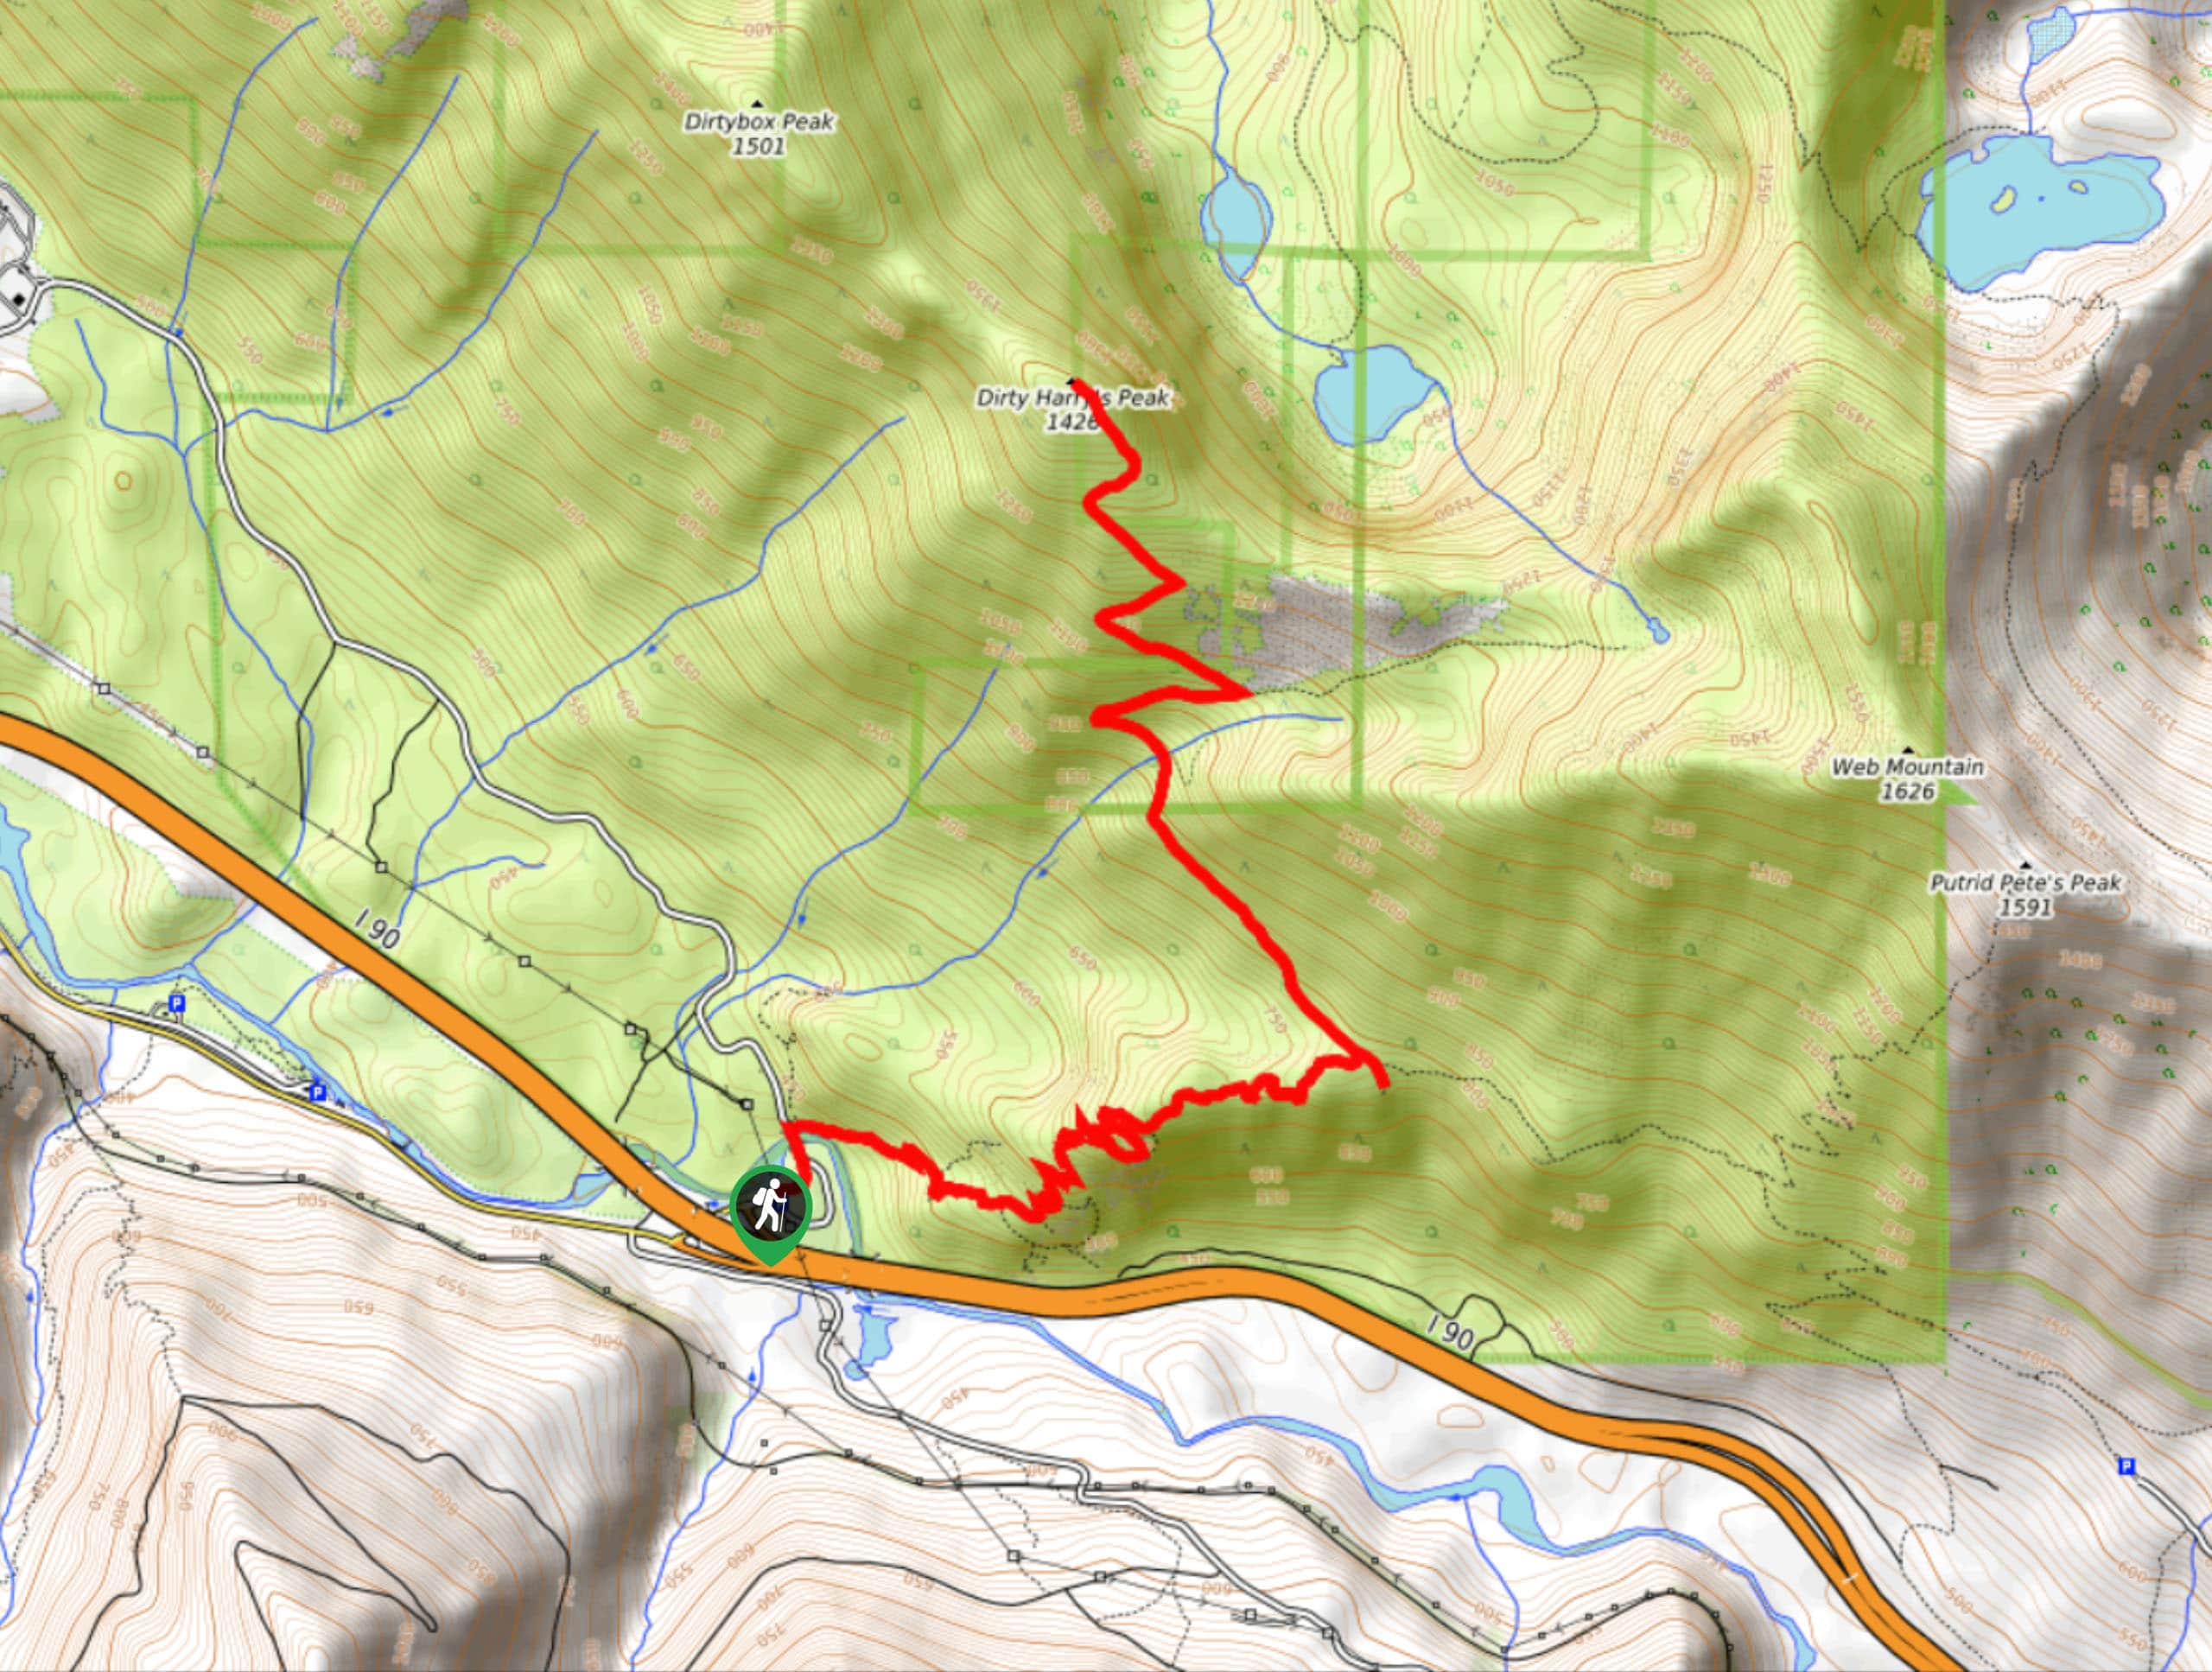 Dirty Harry’s Peak via Birdhouse Trail Map